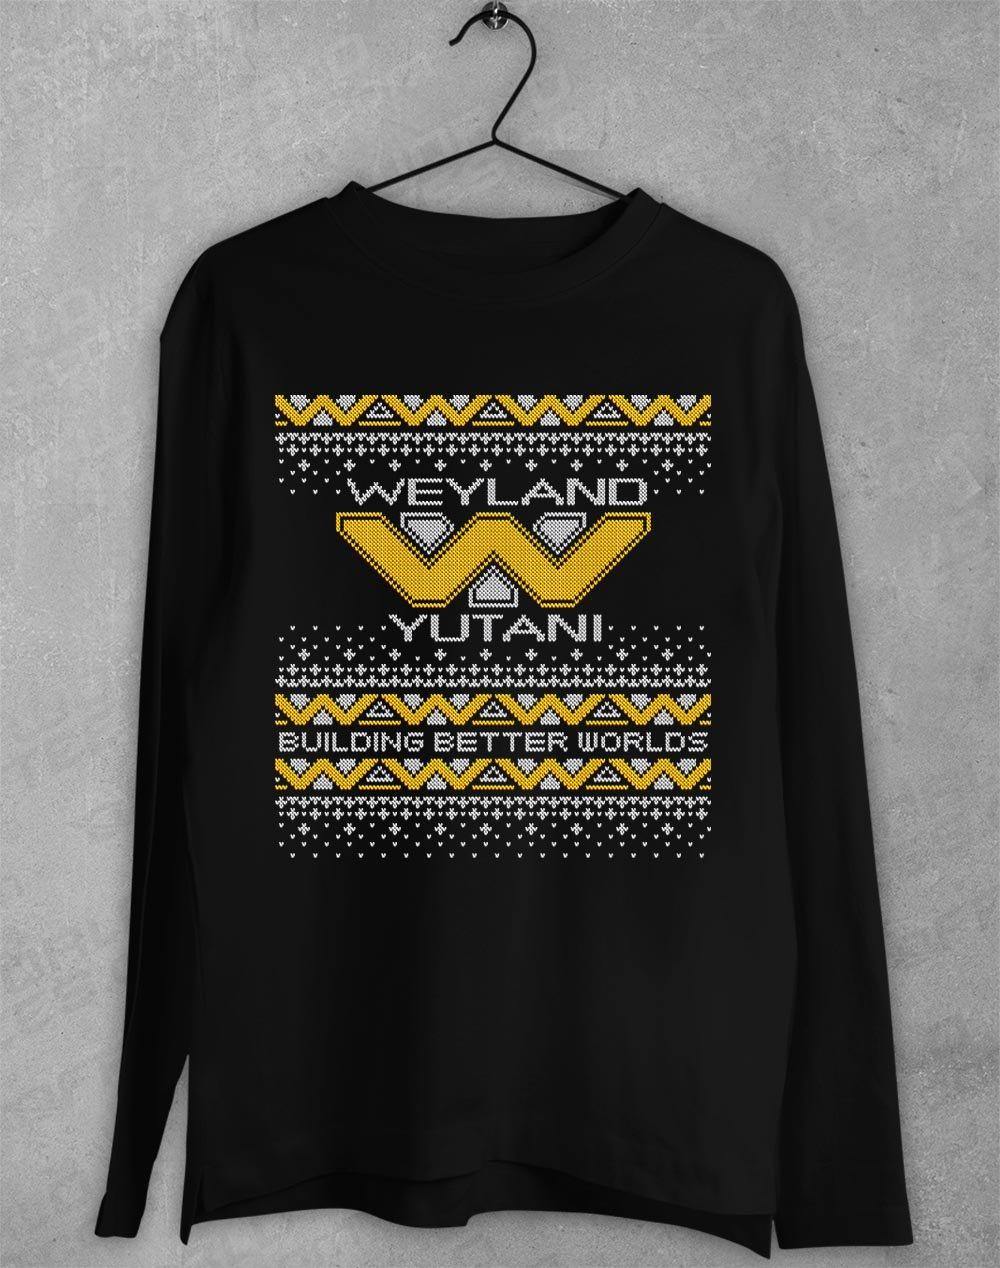 Weyland Yutani Festive Knitted-Look Long Sleeve T-Shirt S / Black  - Off World Tees